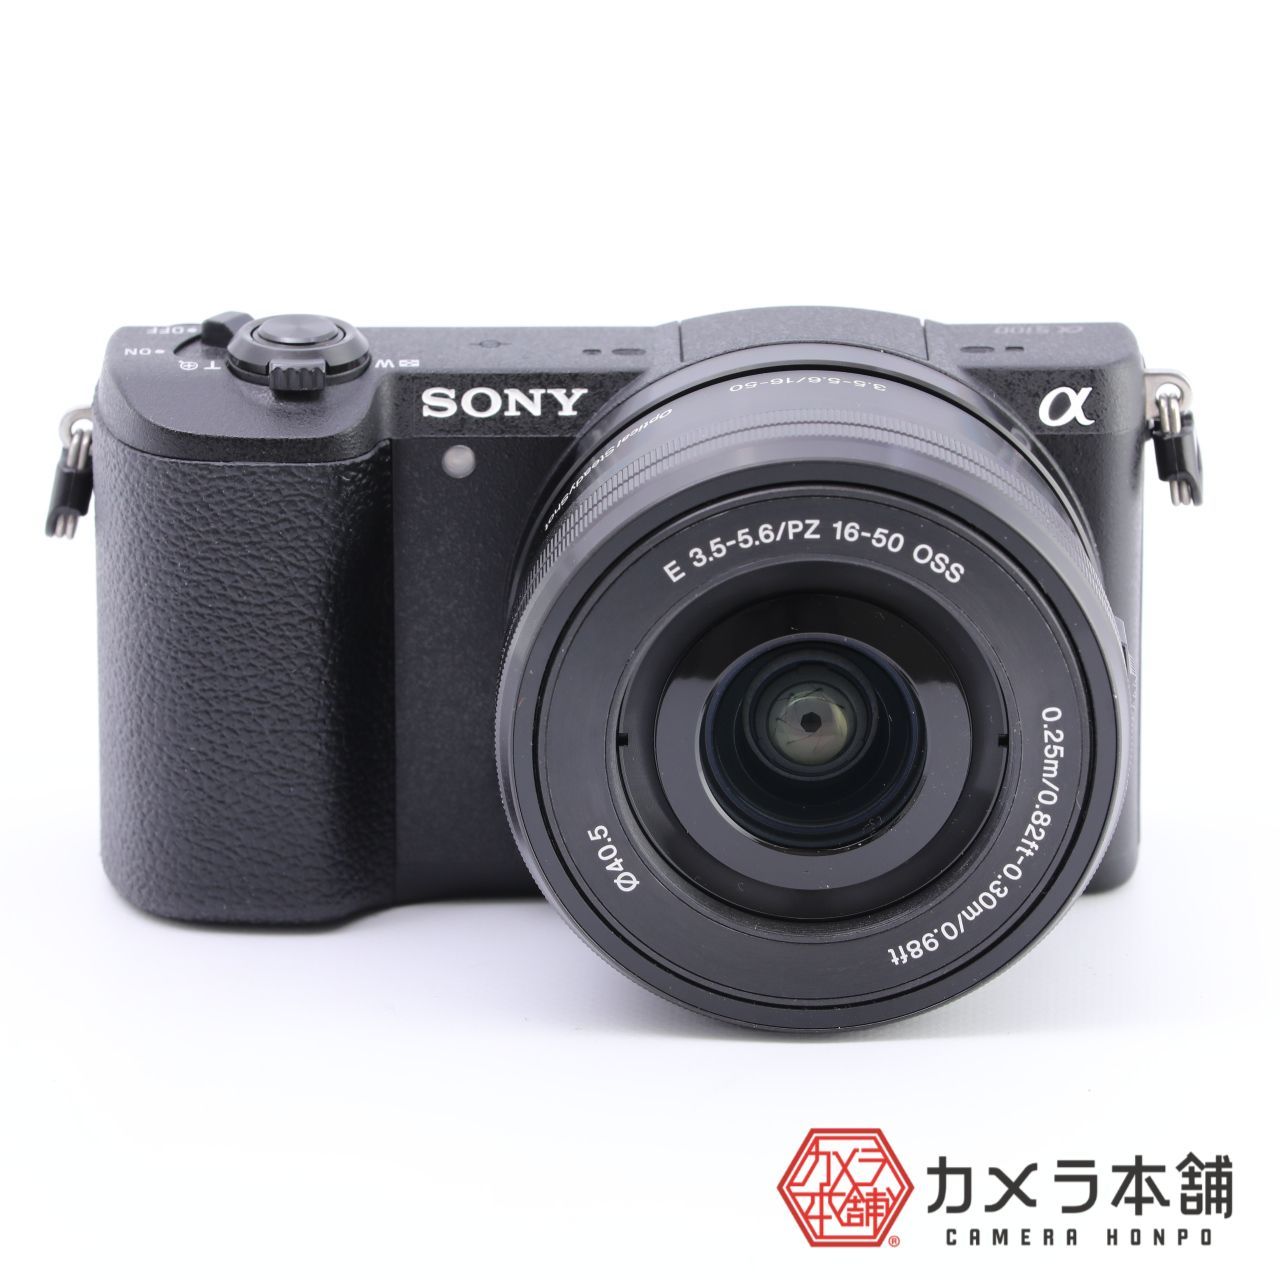 SONY ミラーレス一眼 α5100 E PZ 16-50mm F3.5-5.6 カメラ本舗｜Camera honpo メルカリ